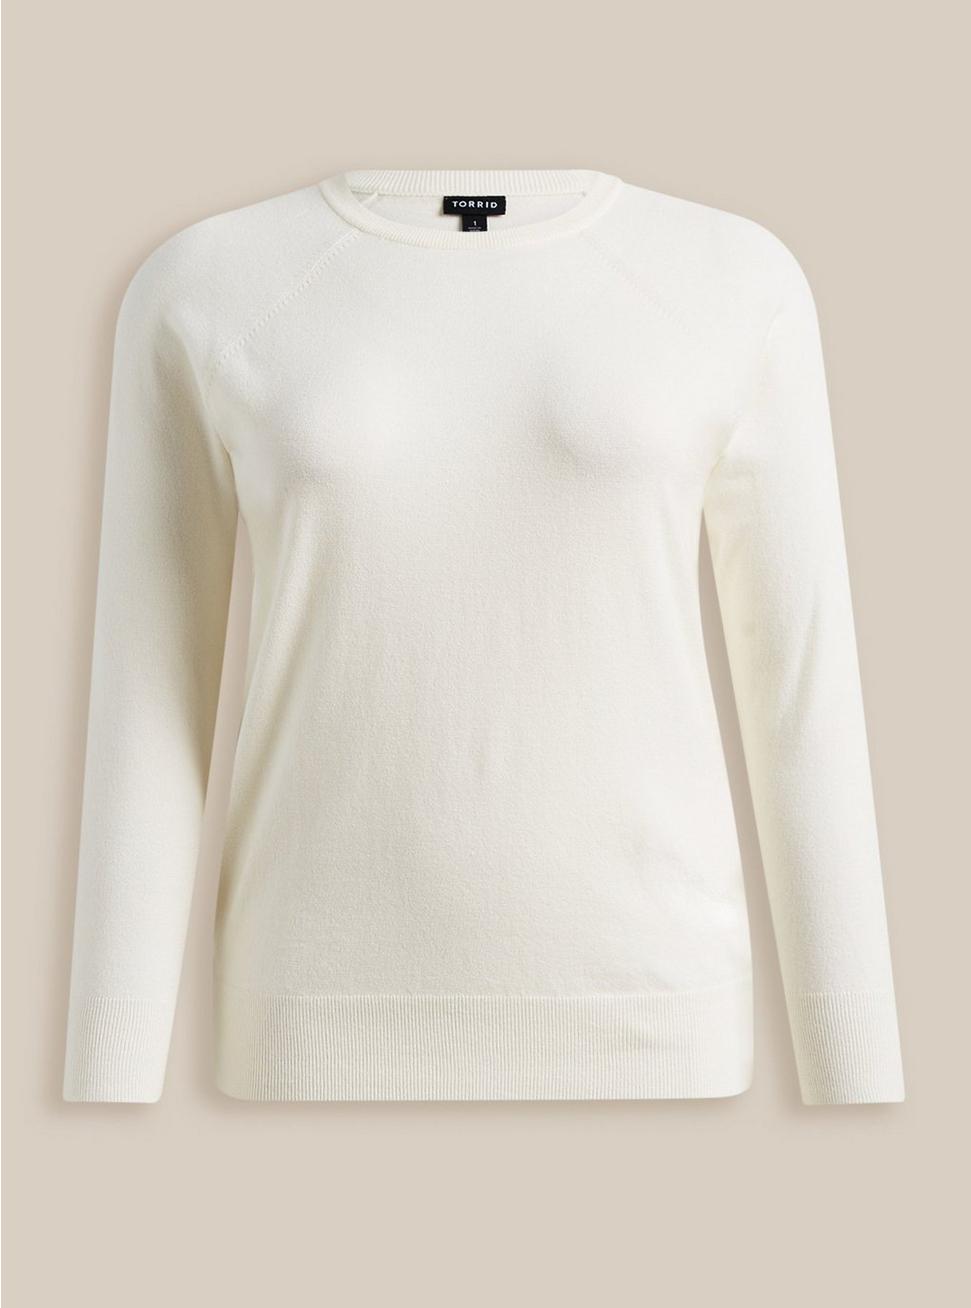 Plus Size Everyday Soft Pullover Crew Sweater, PRISTINE, hi-res